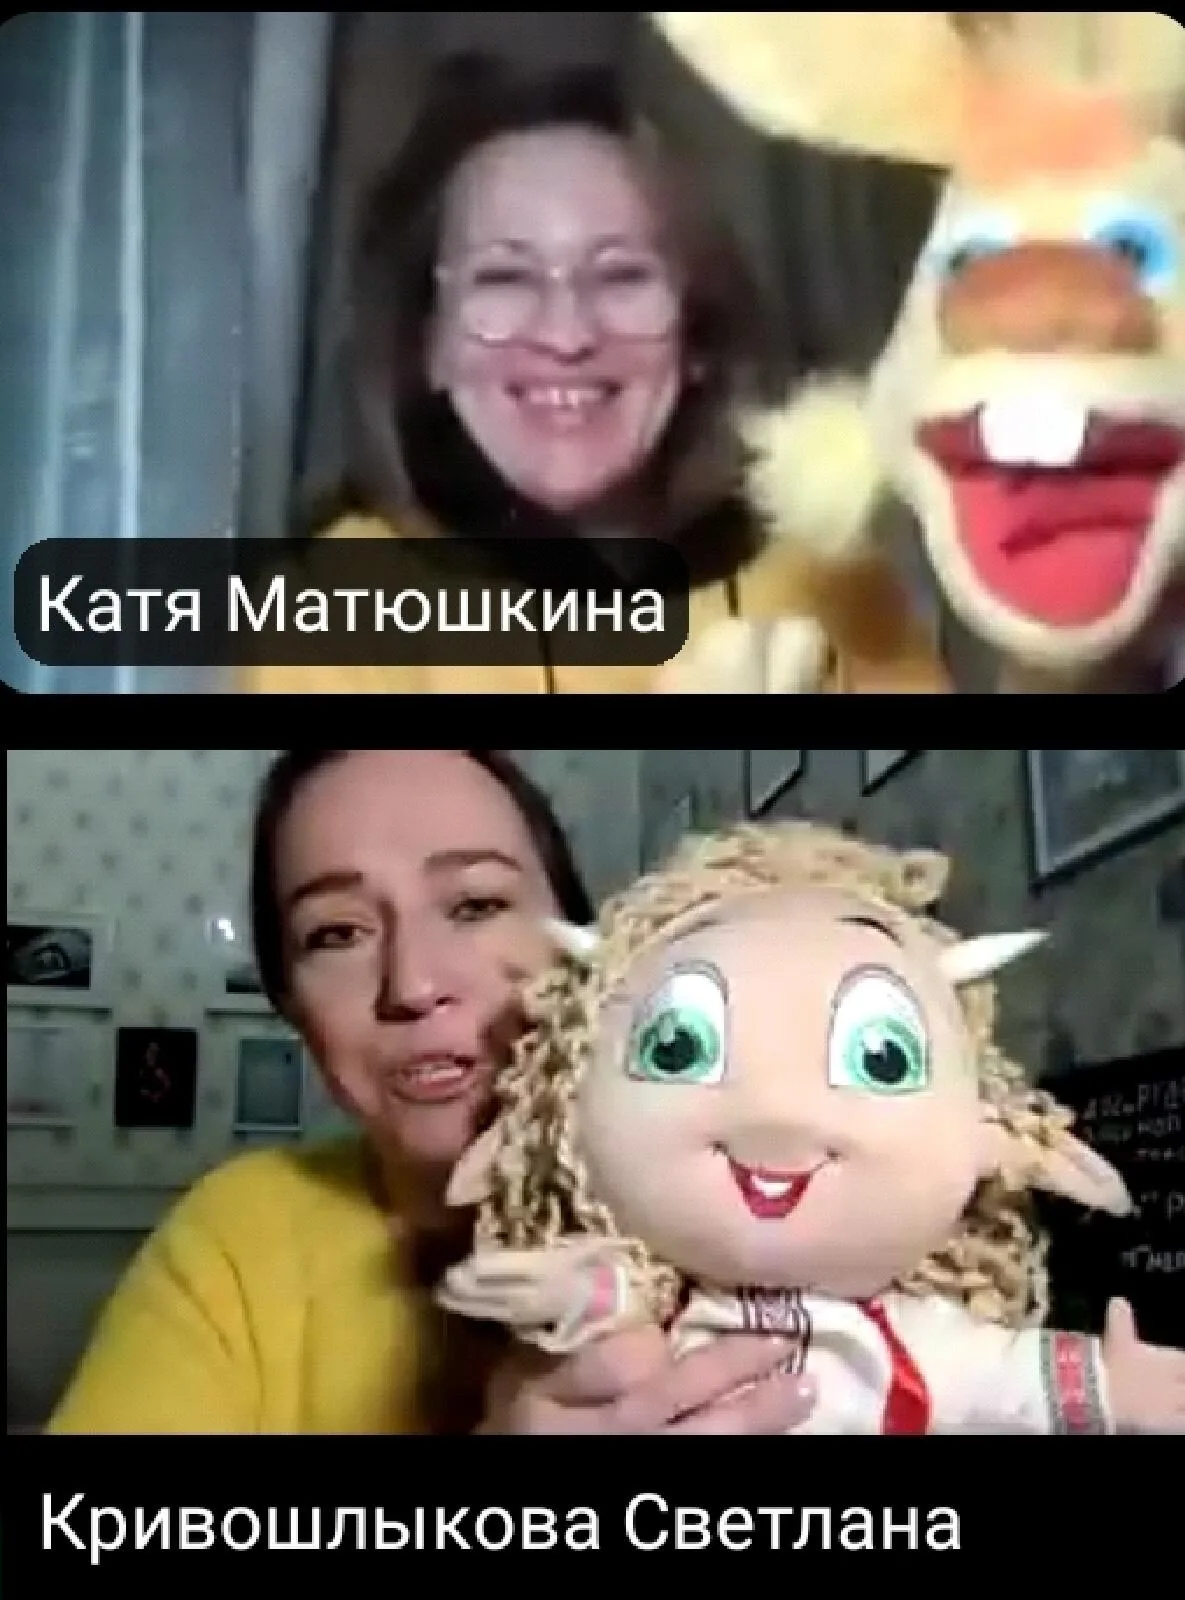 Кривошлыкова Светлана и Катя Матюшкина в Zoom